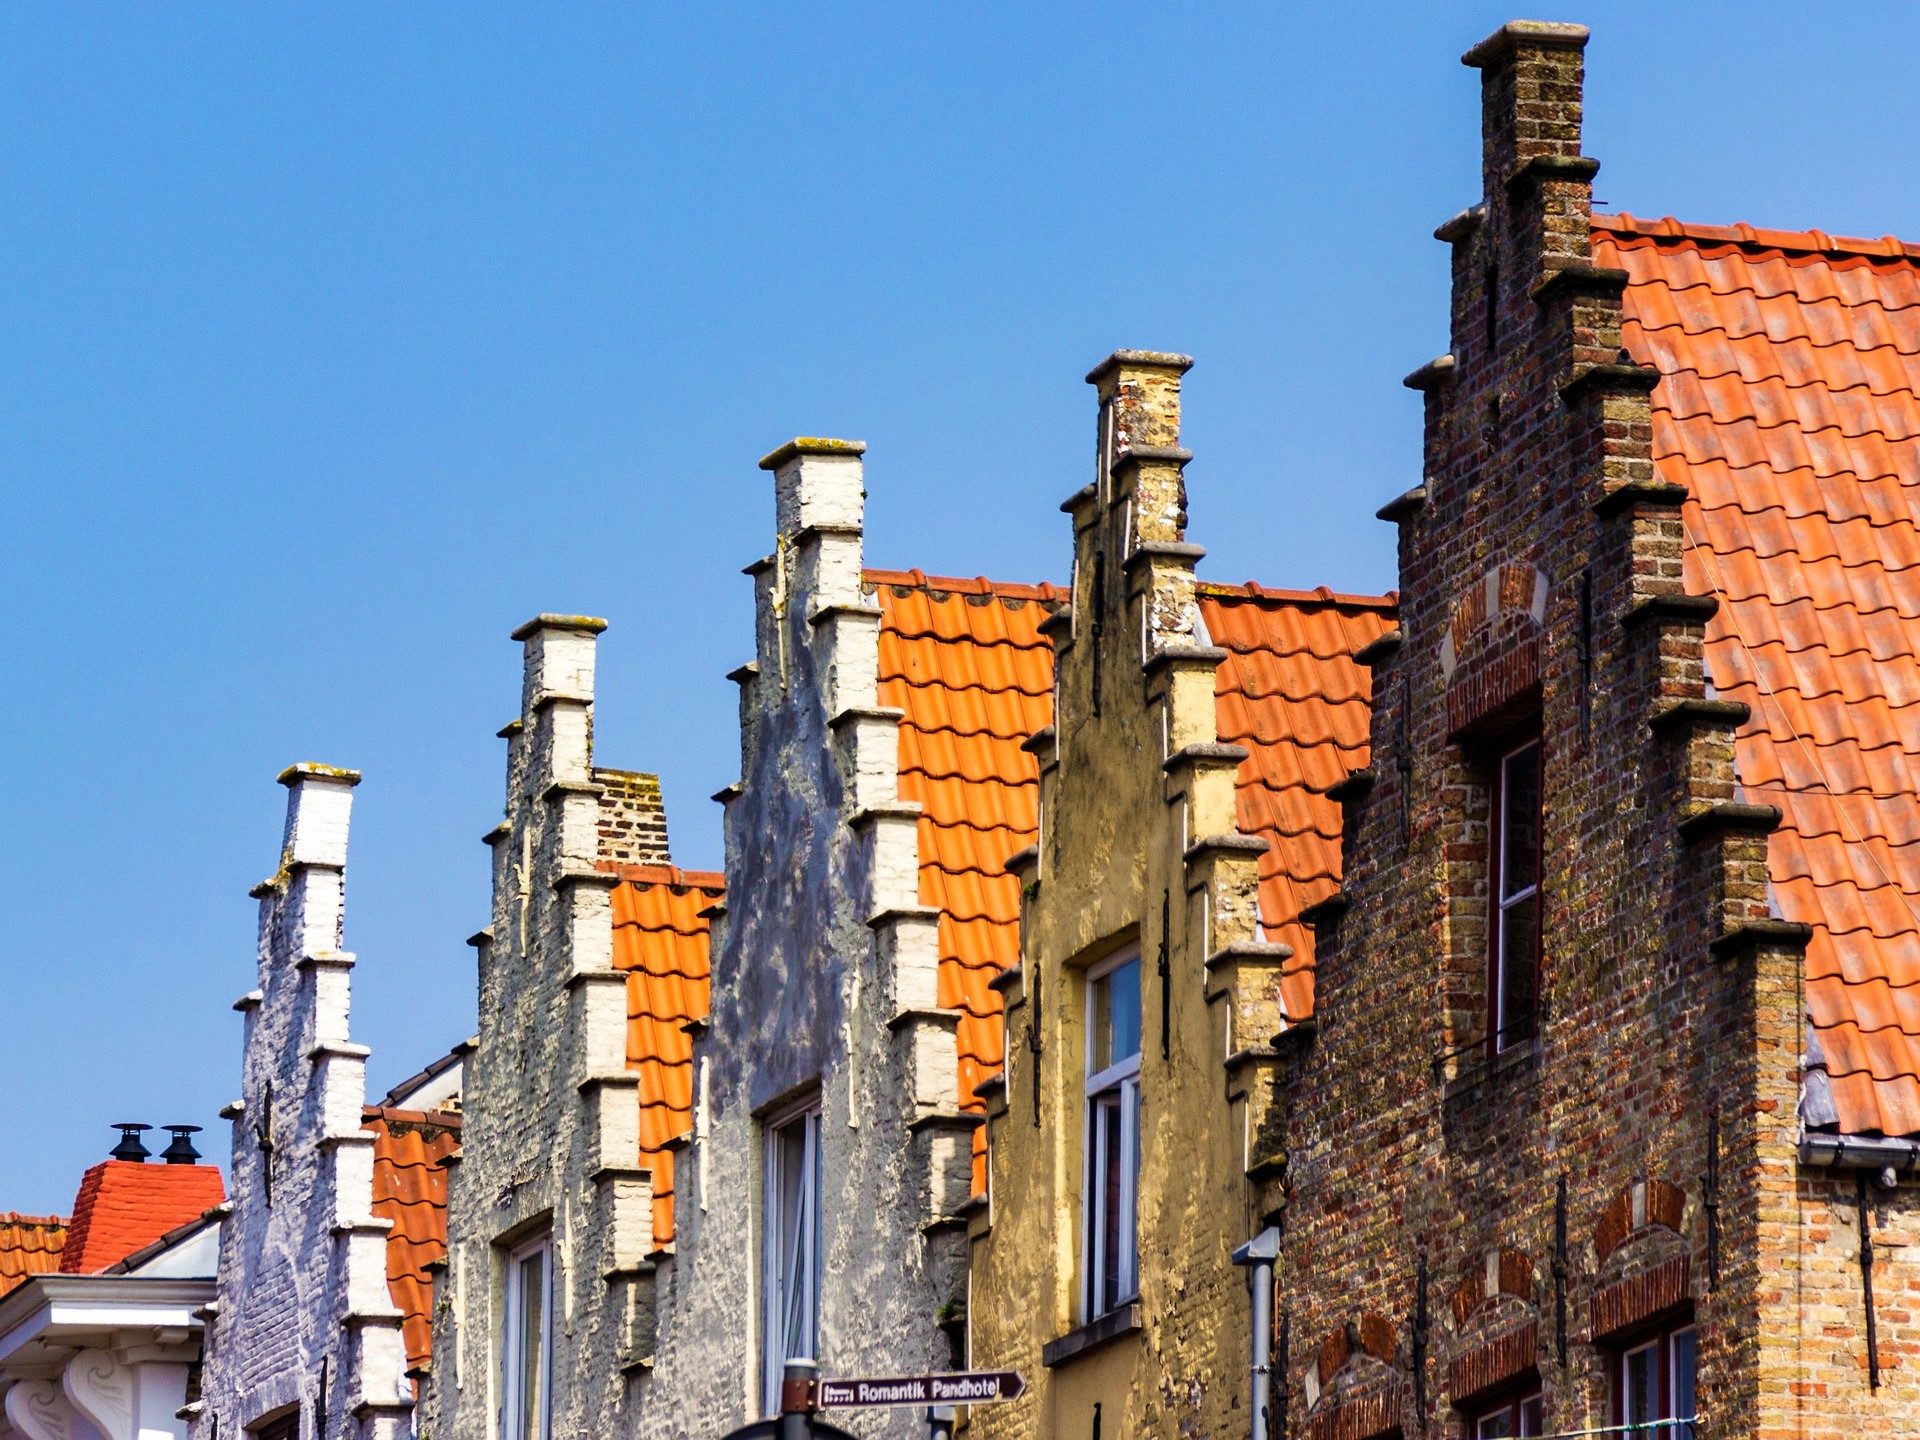 Almshouses in Bruges - Bruges top attractions